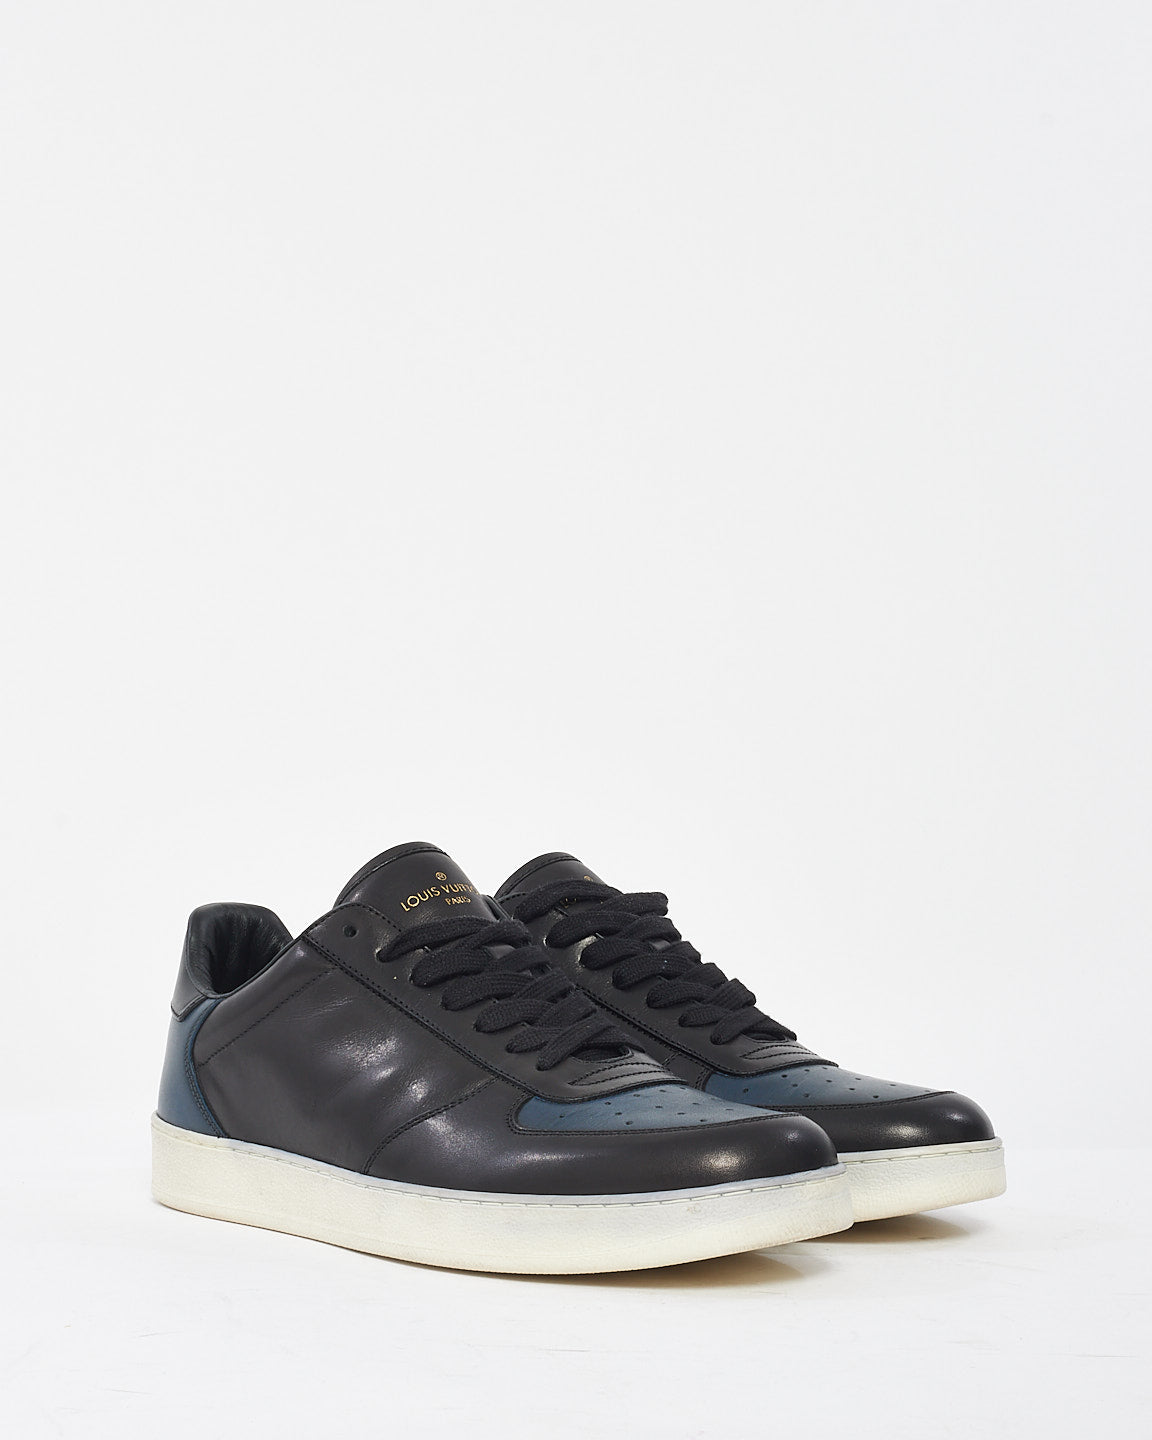 Louis Vuitton Men's Black Leather Low Top Sneakers - 6.5